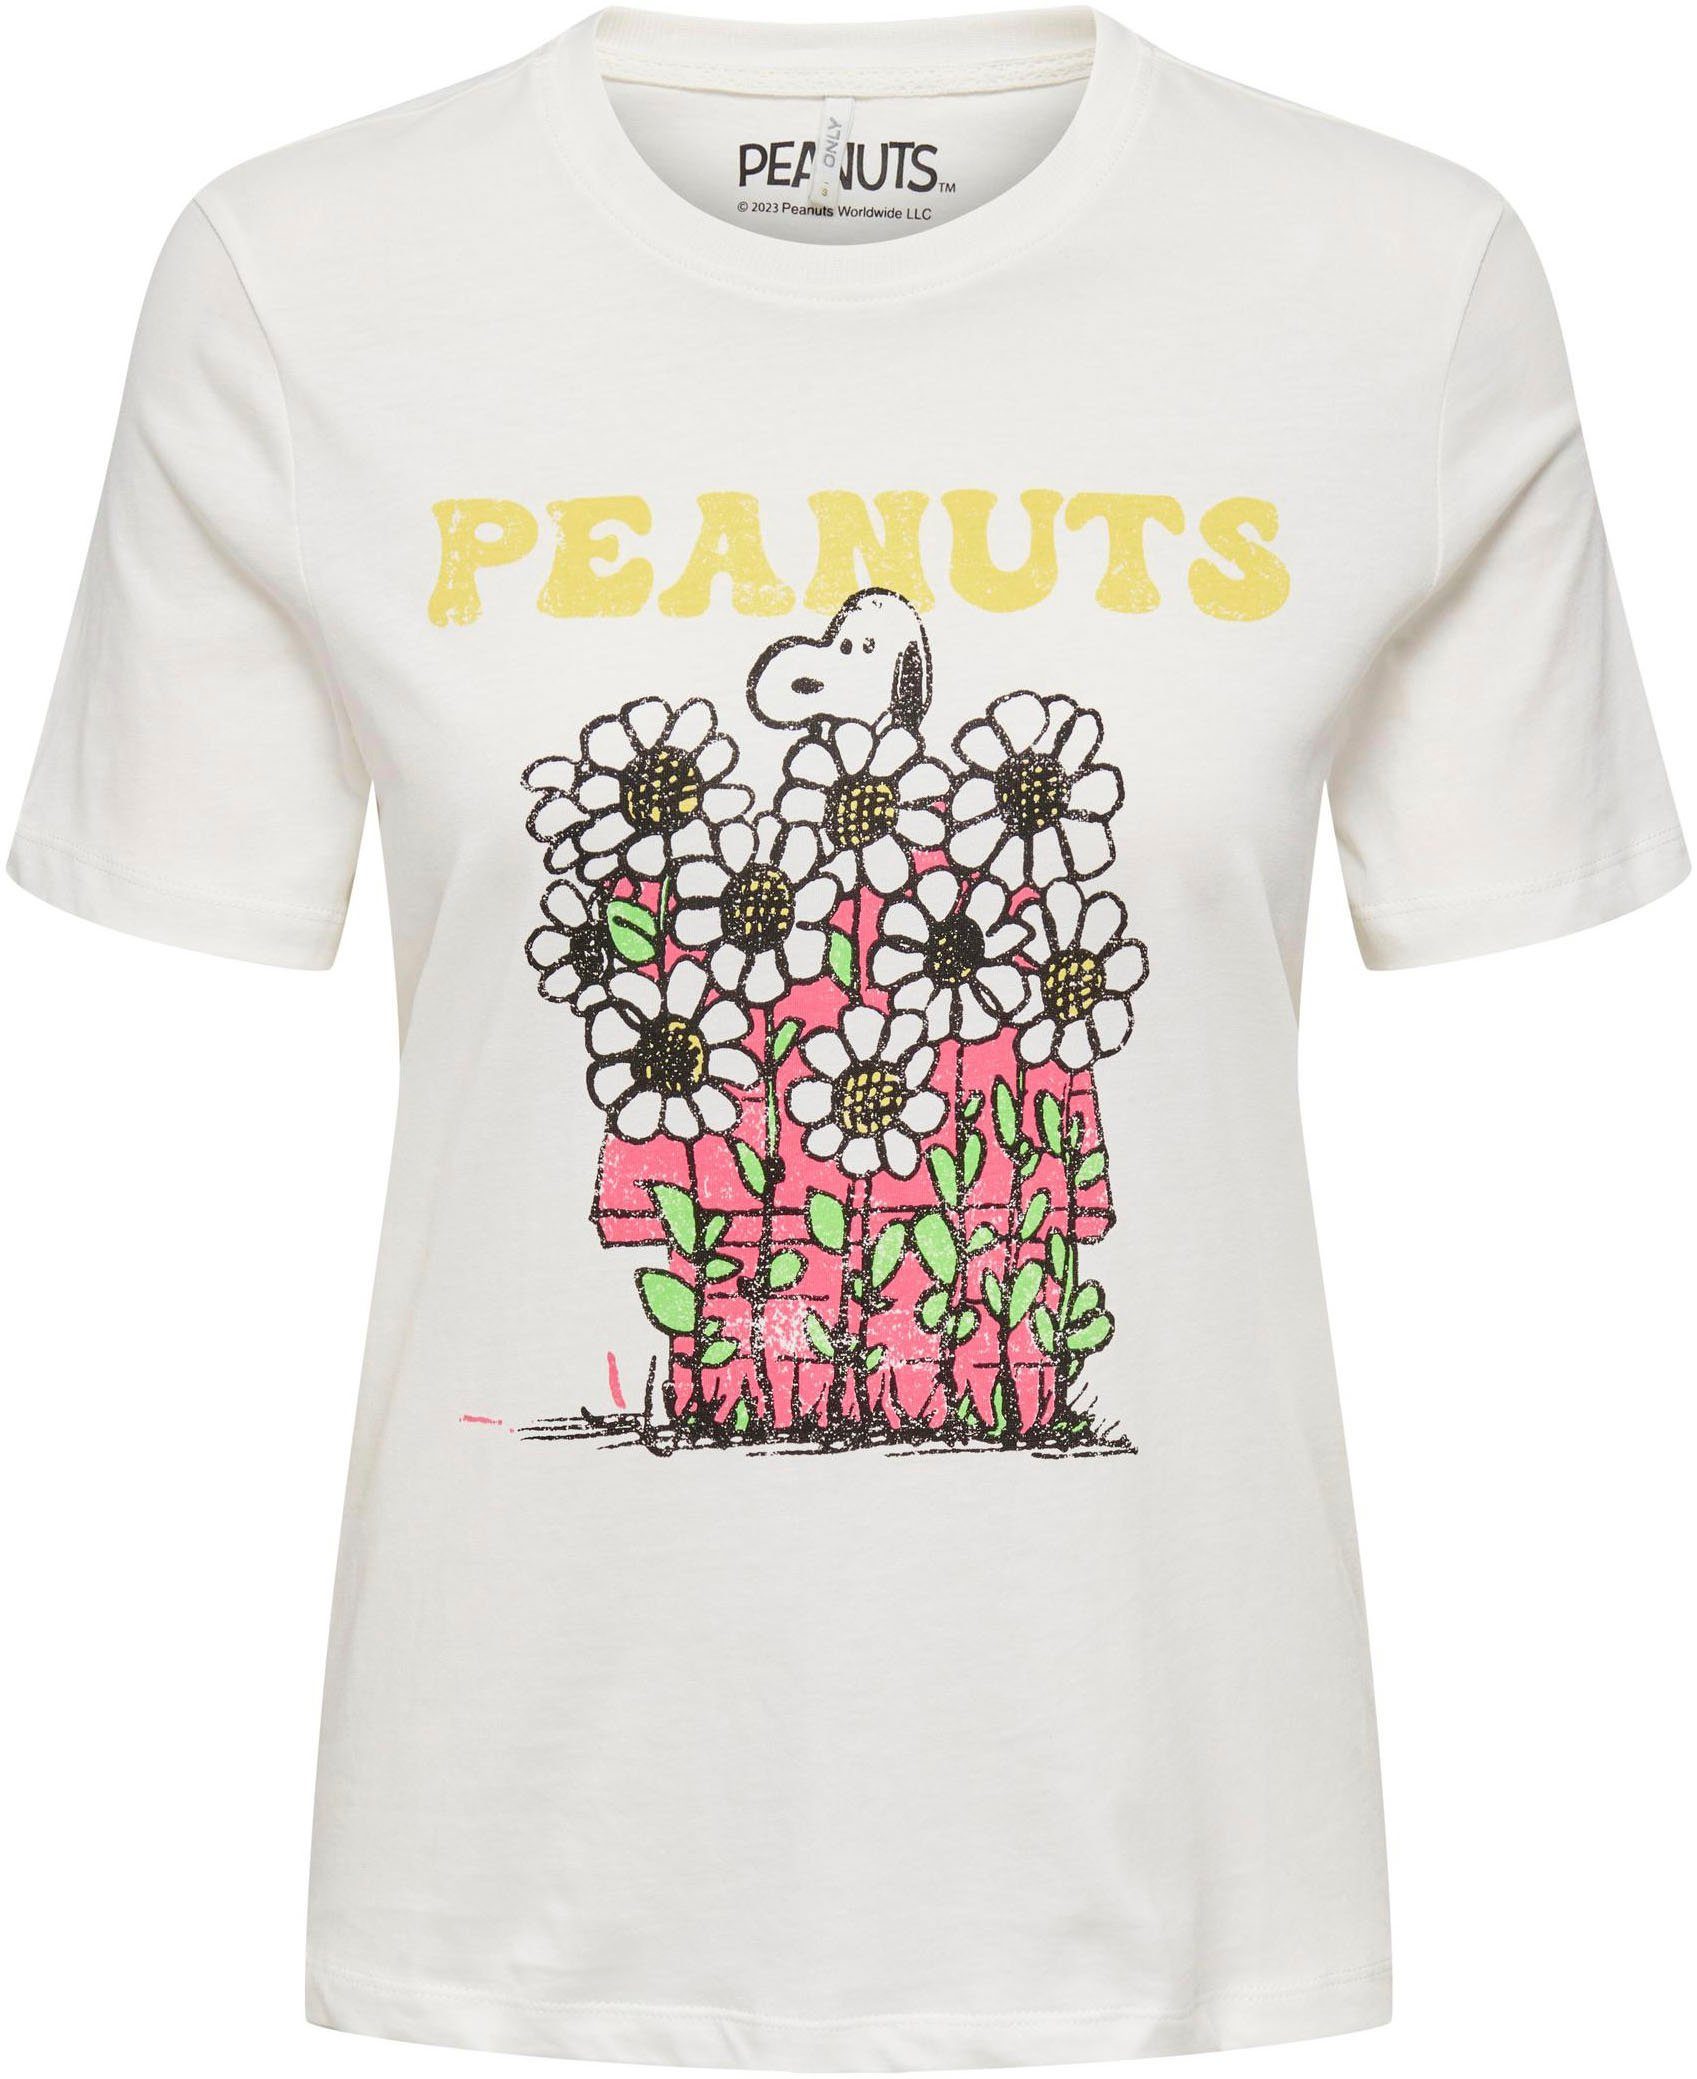 ONLY FLOWER REG ONLPEANUTS BOX unterschiedliche Kurzarmshirt TOP JRS Cloud Print:Sunflowers Snoopy S/S Prints Dancer